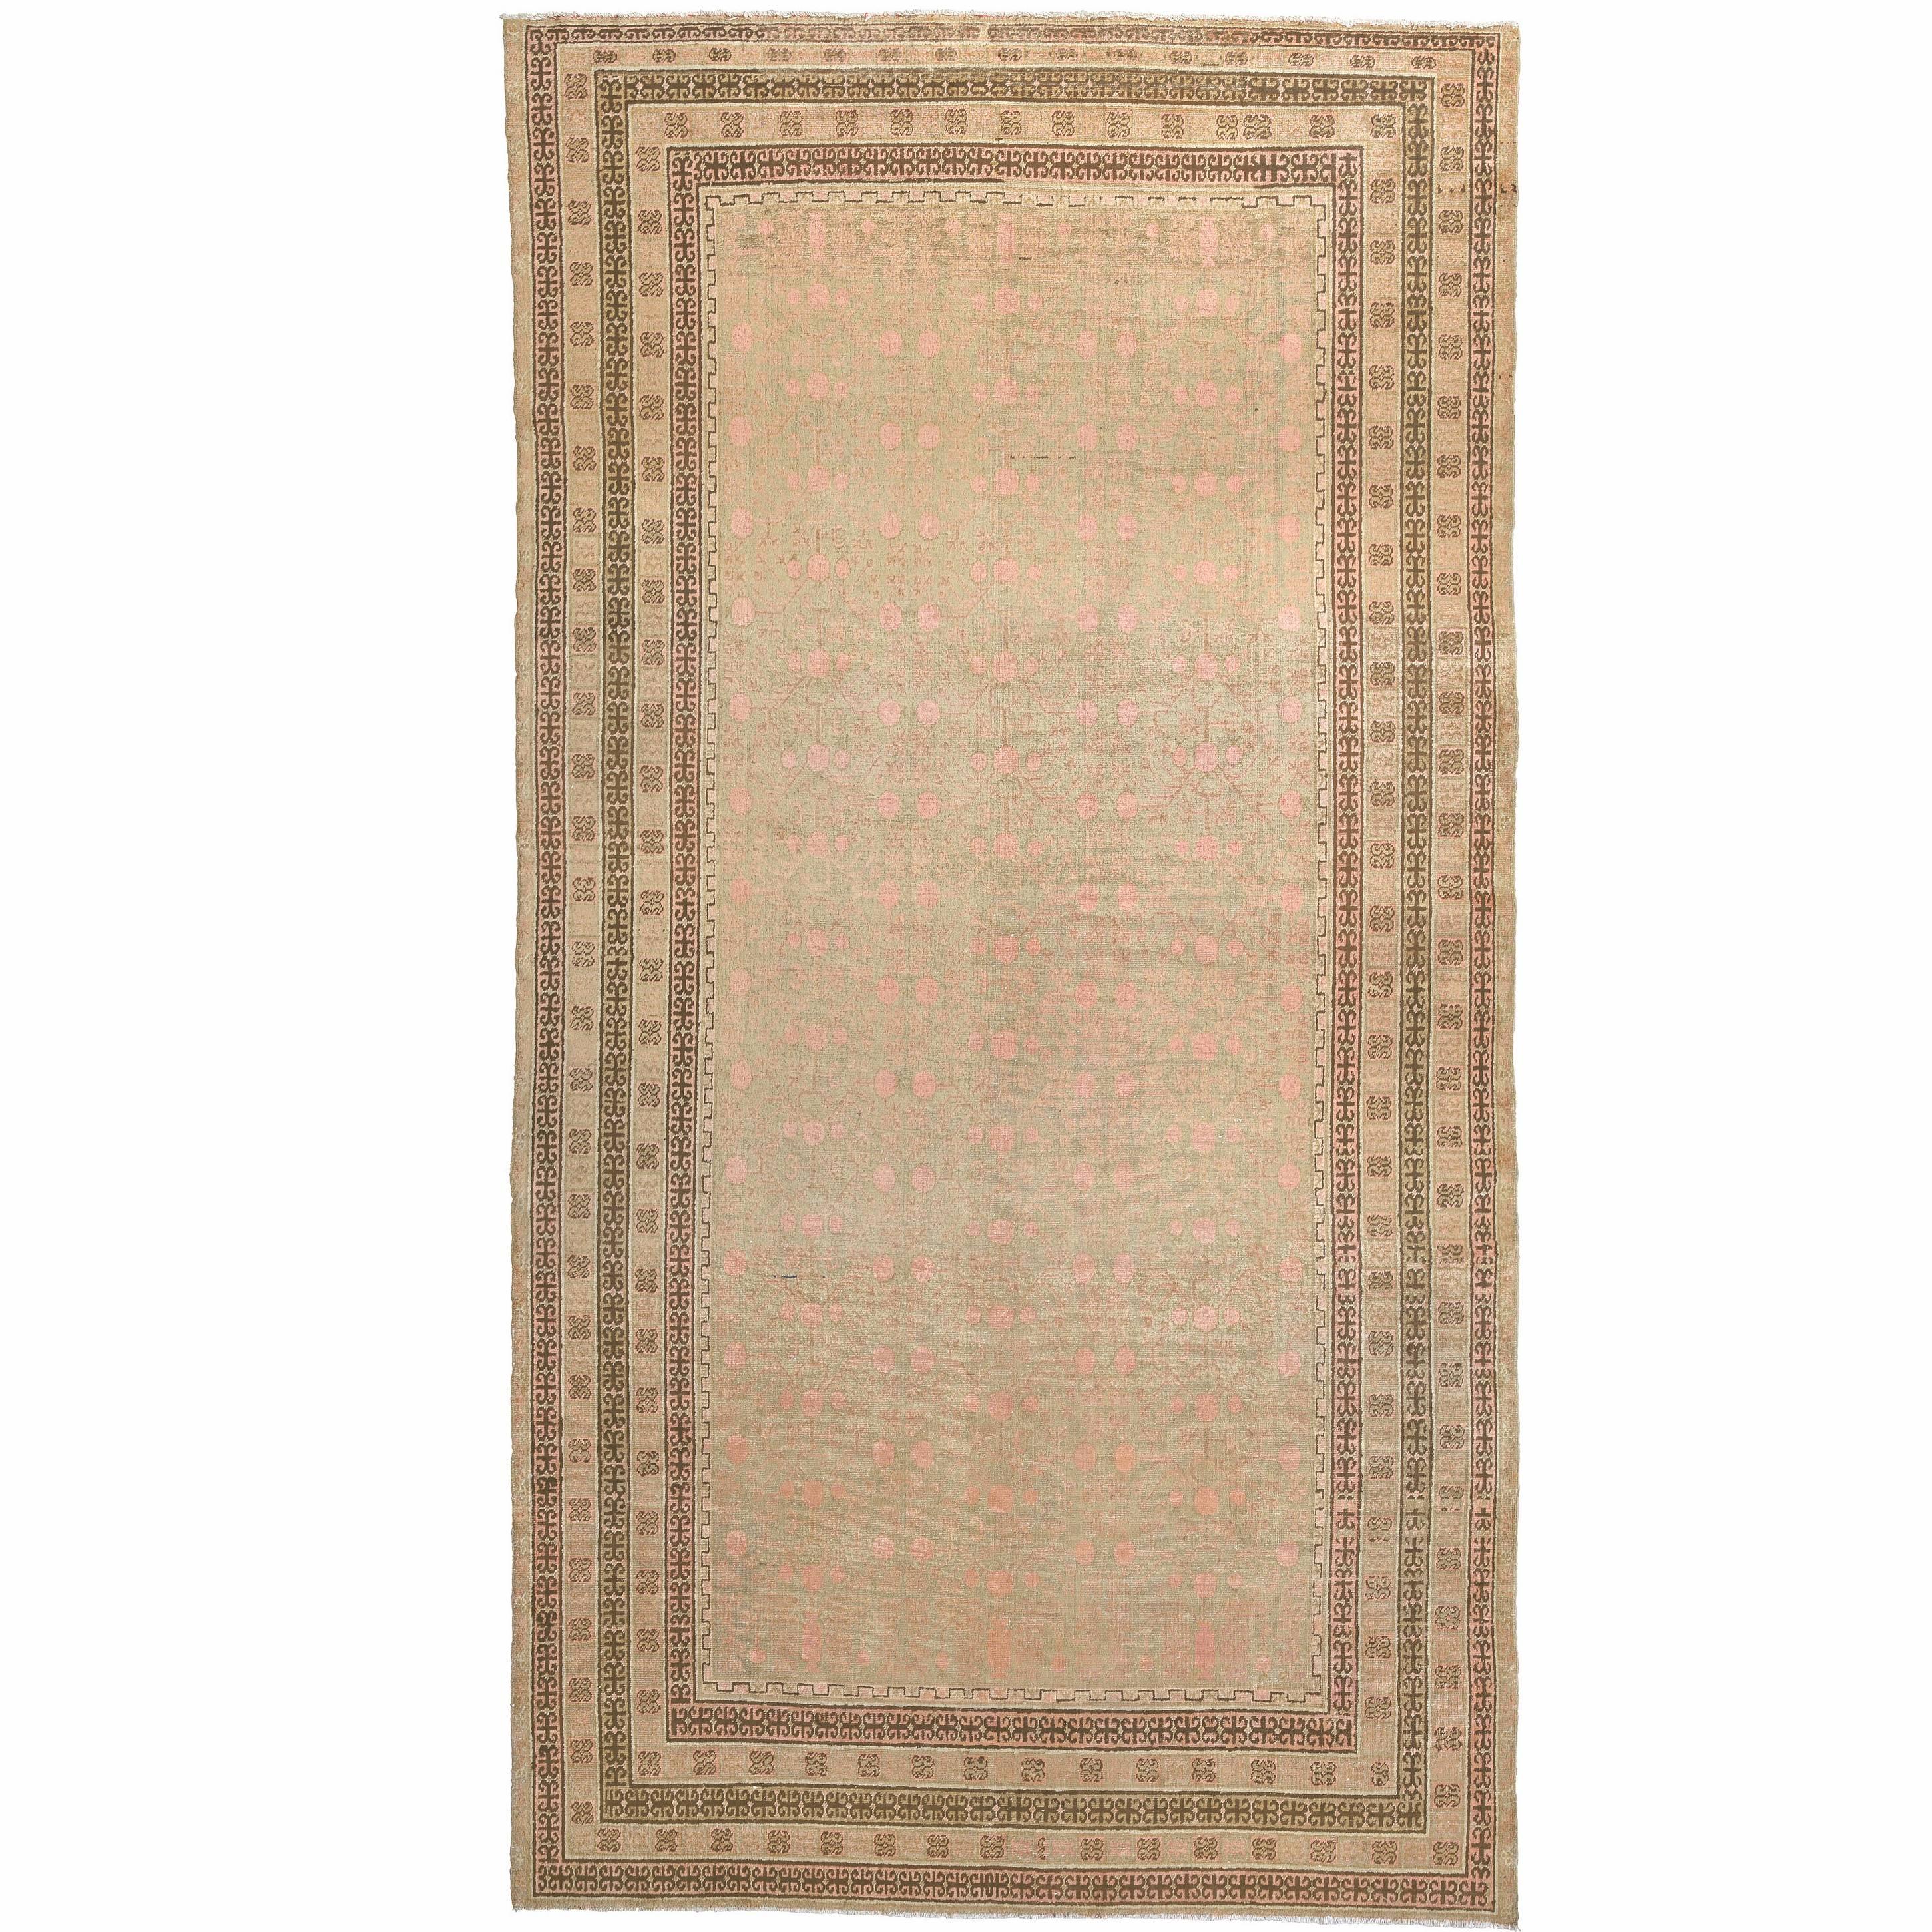 Early 20th Century Khotan Carpet For Sale